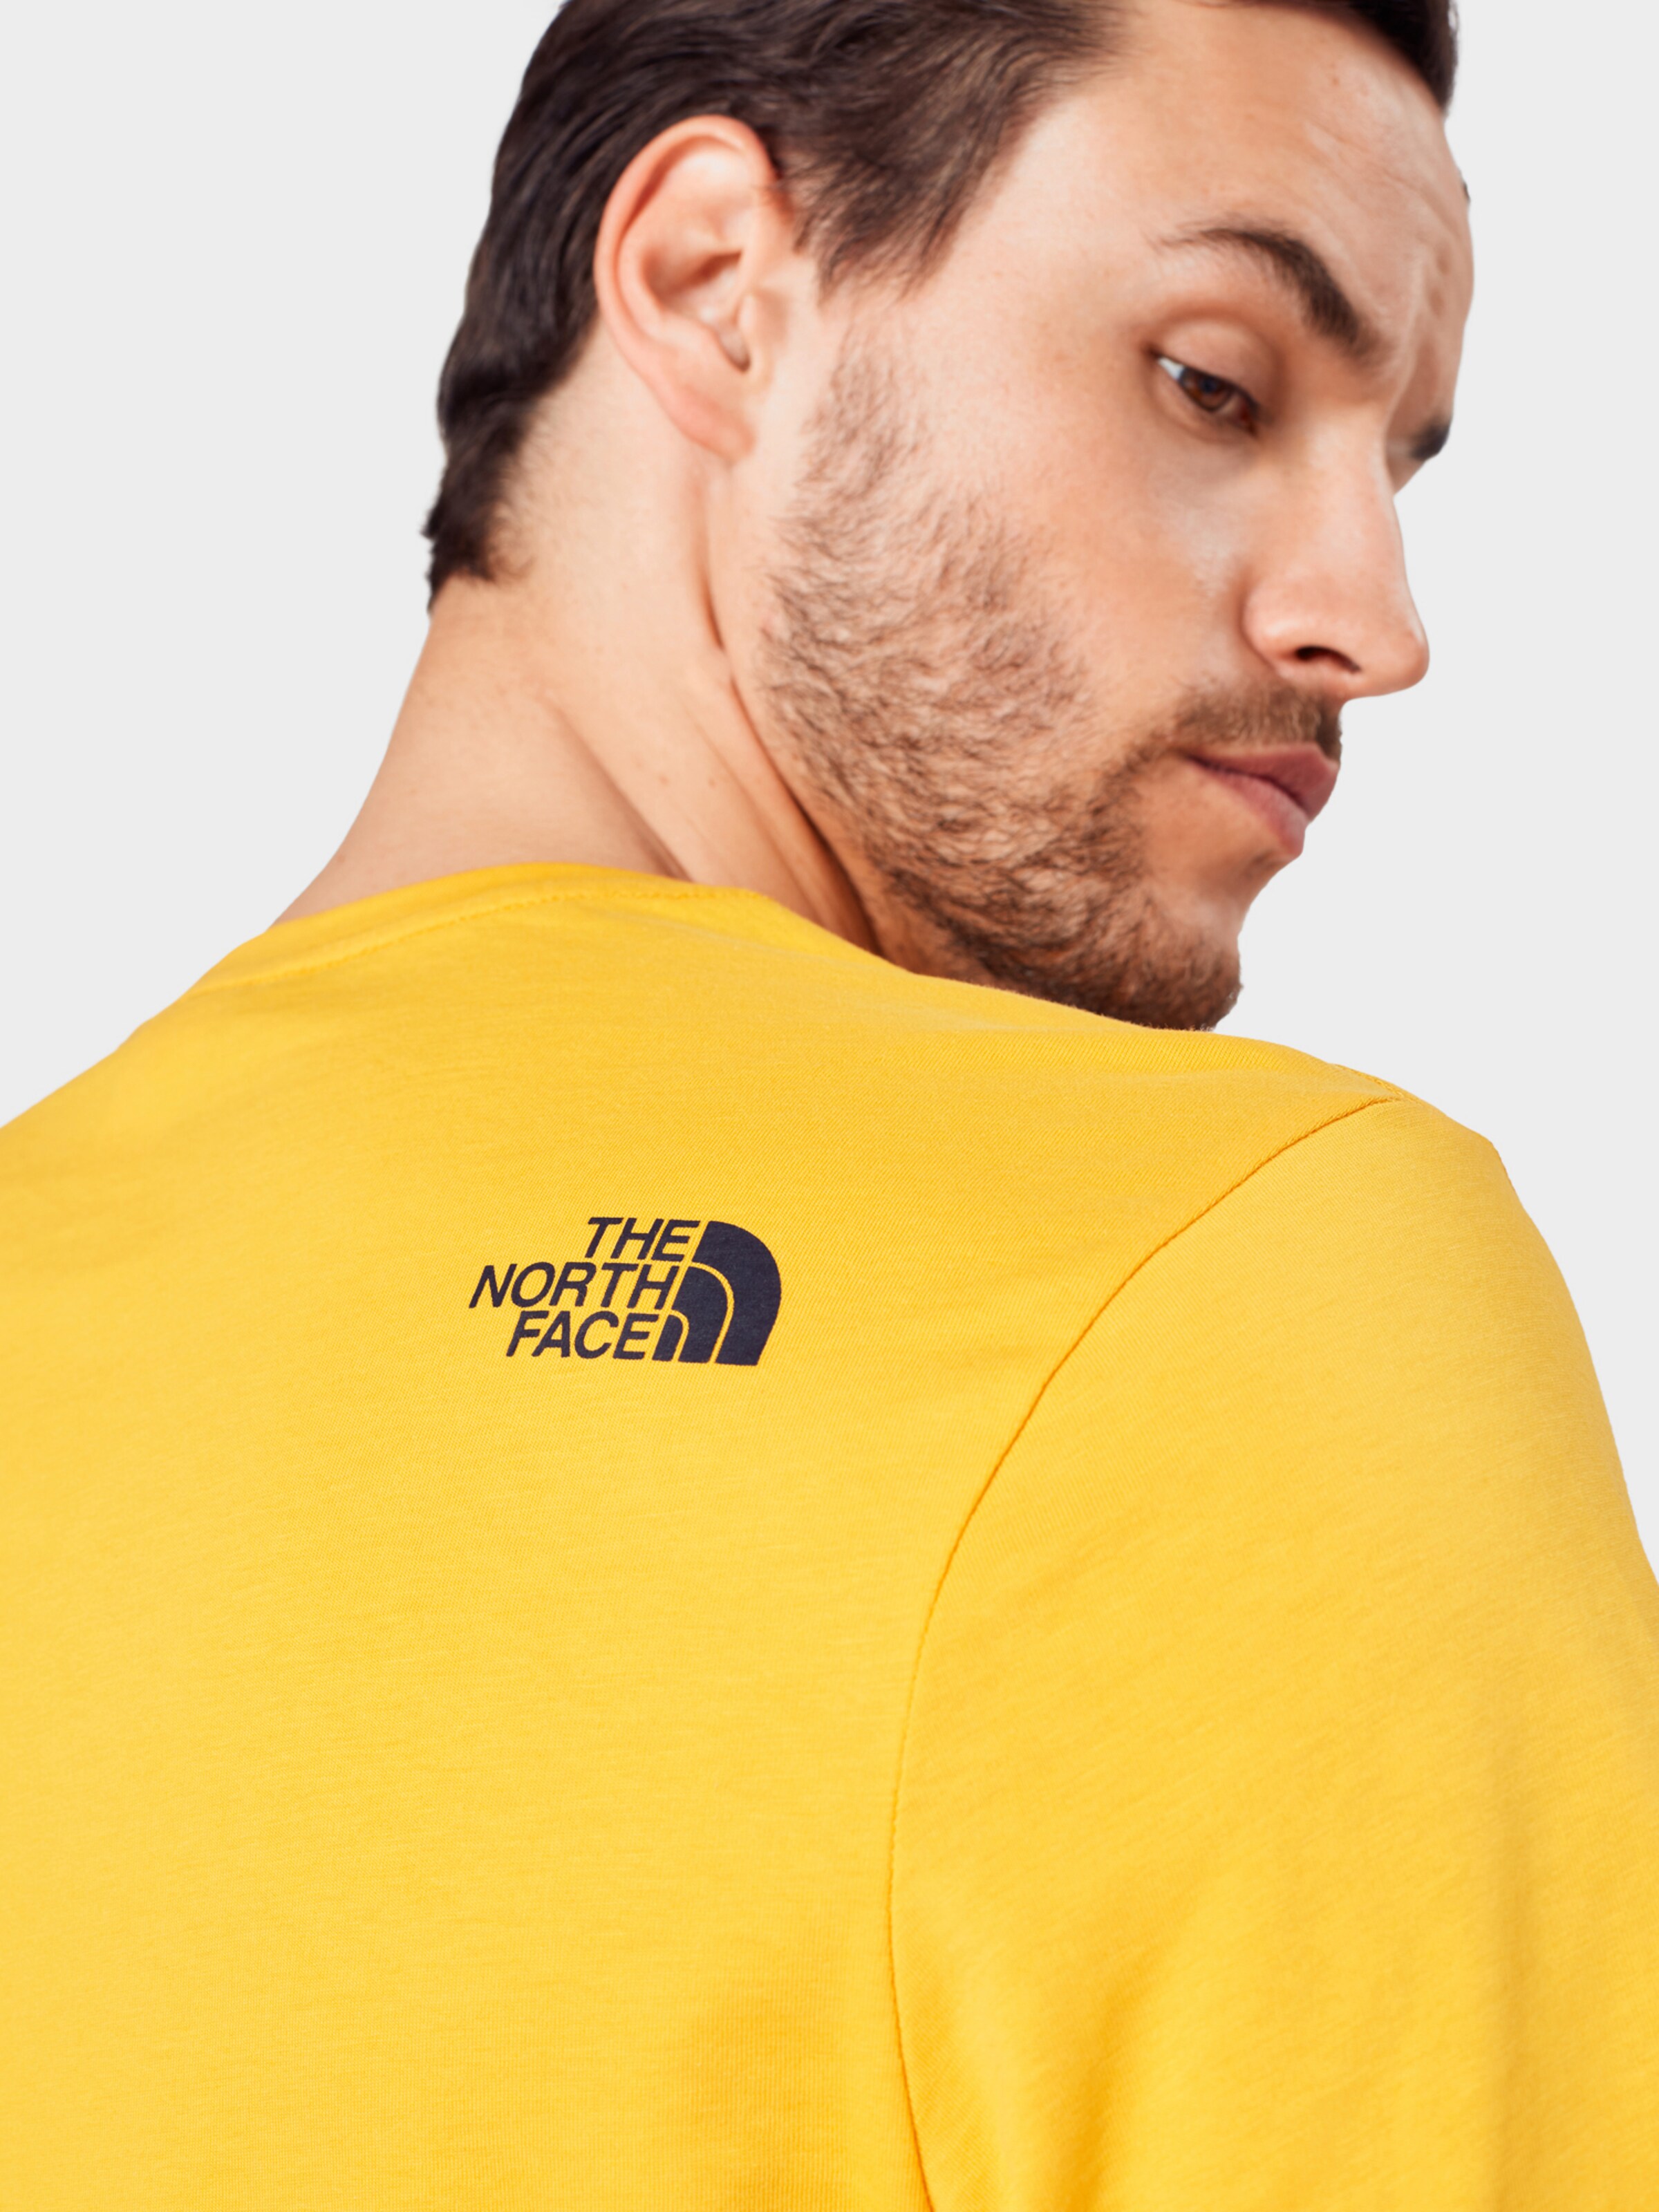 adidas originals t shirt linéaire jaune